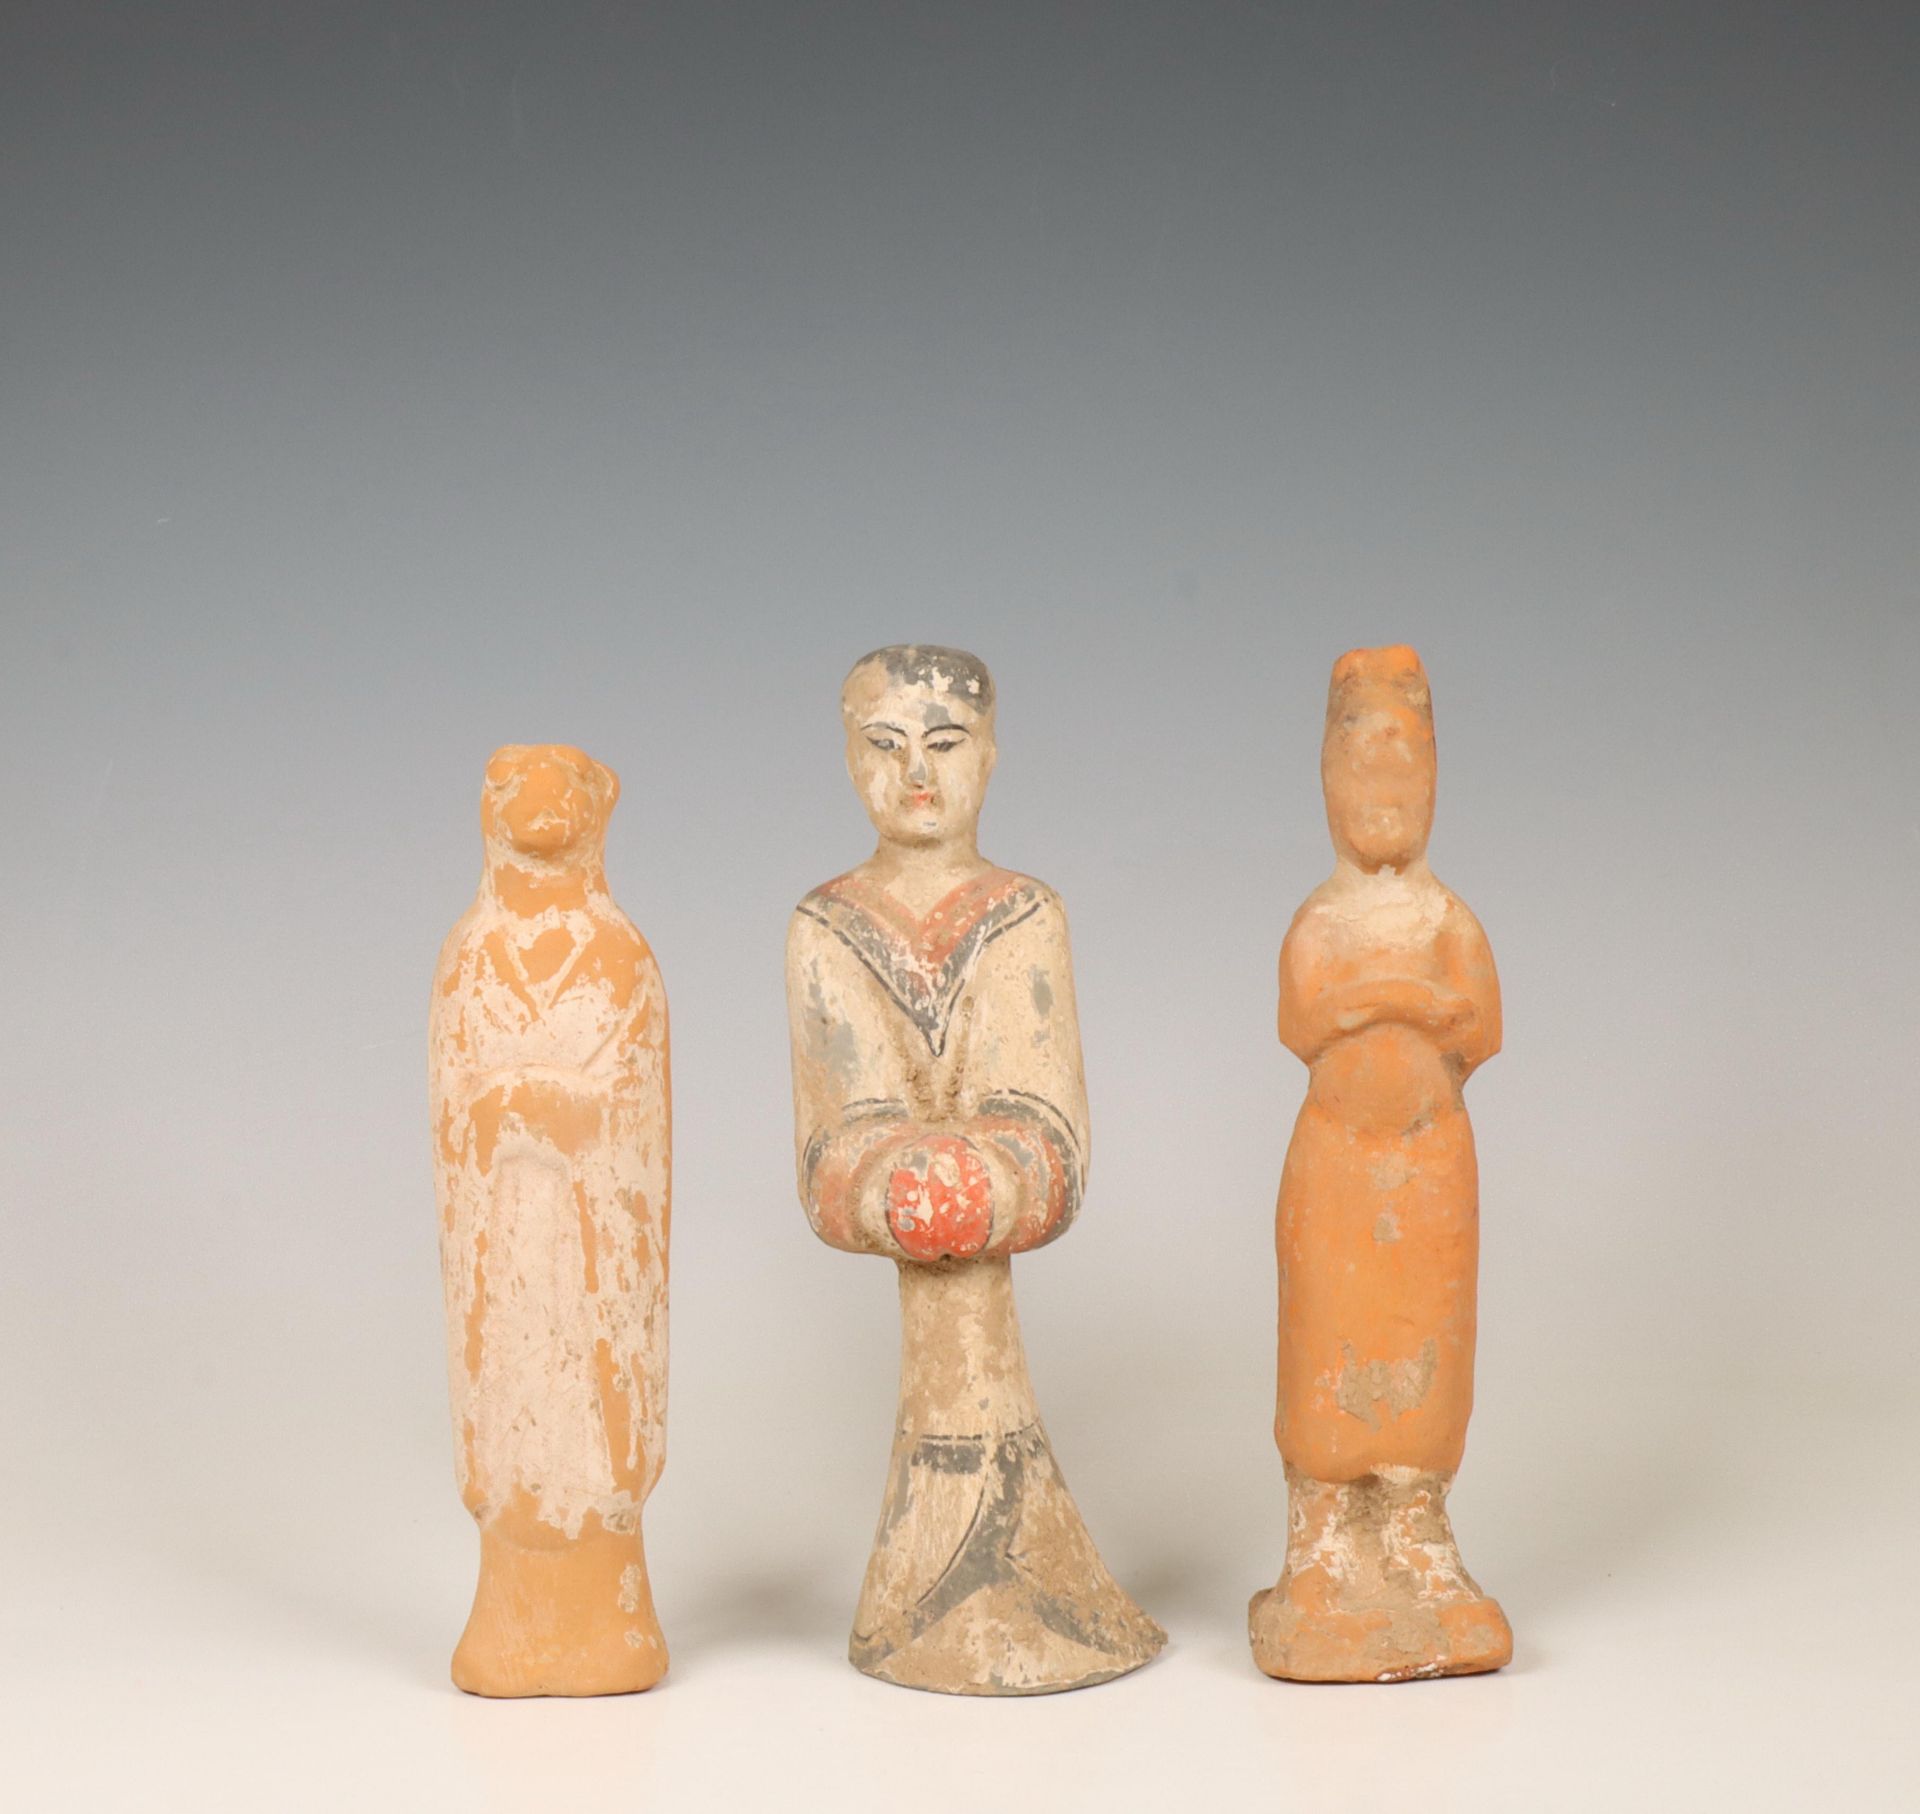 China, three pottery figures, possibly Han dynasty (206 BC-220 AD),